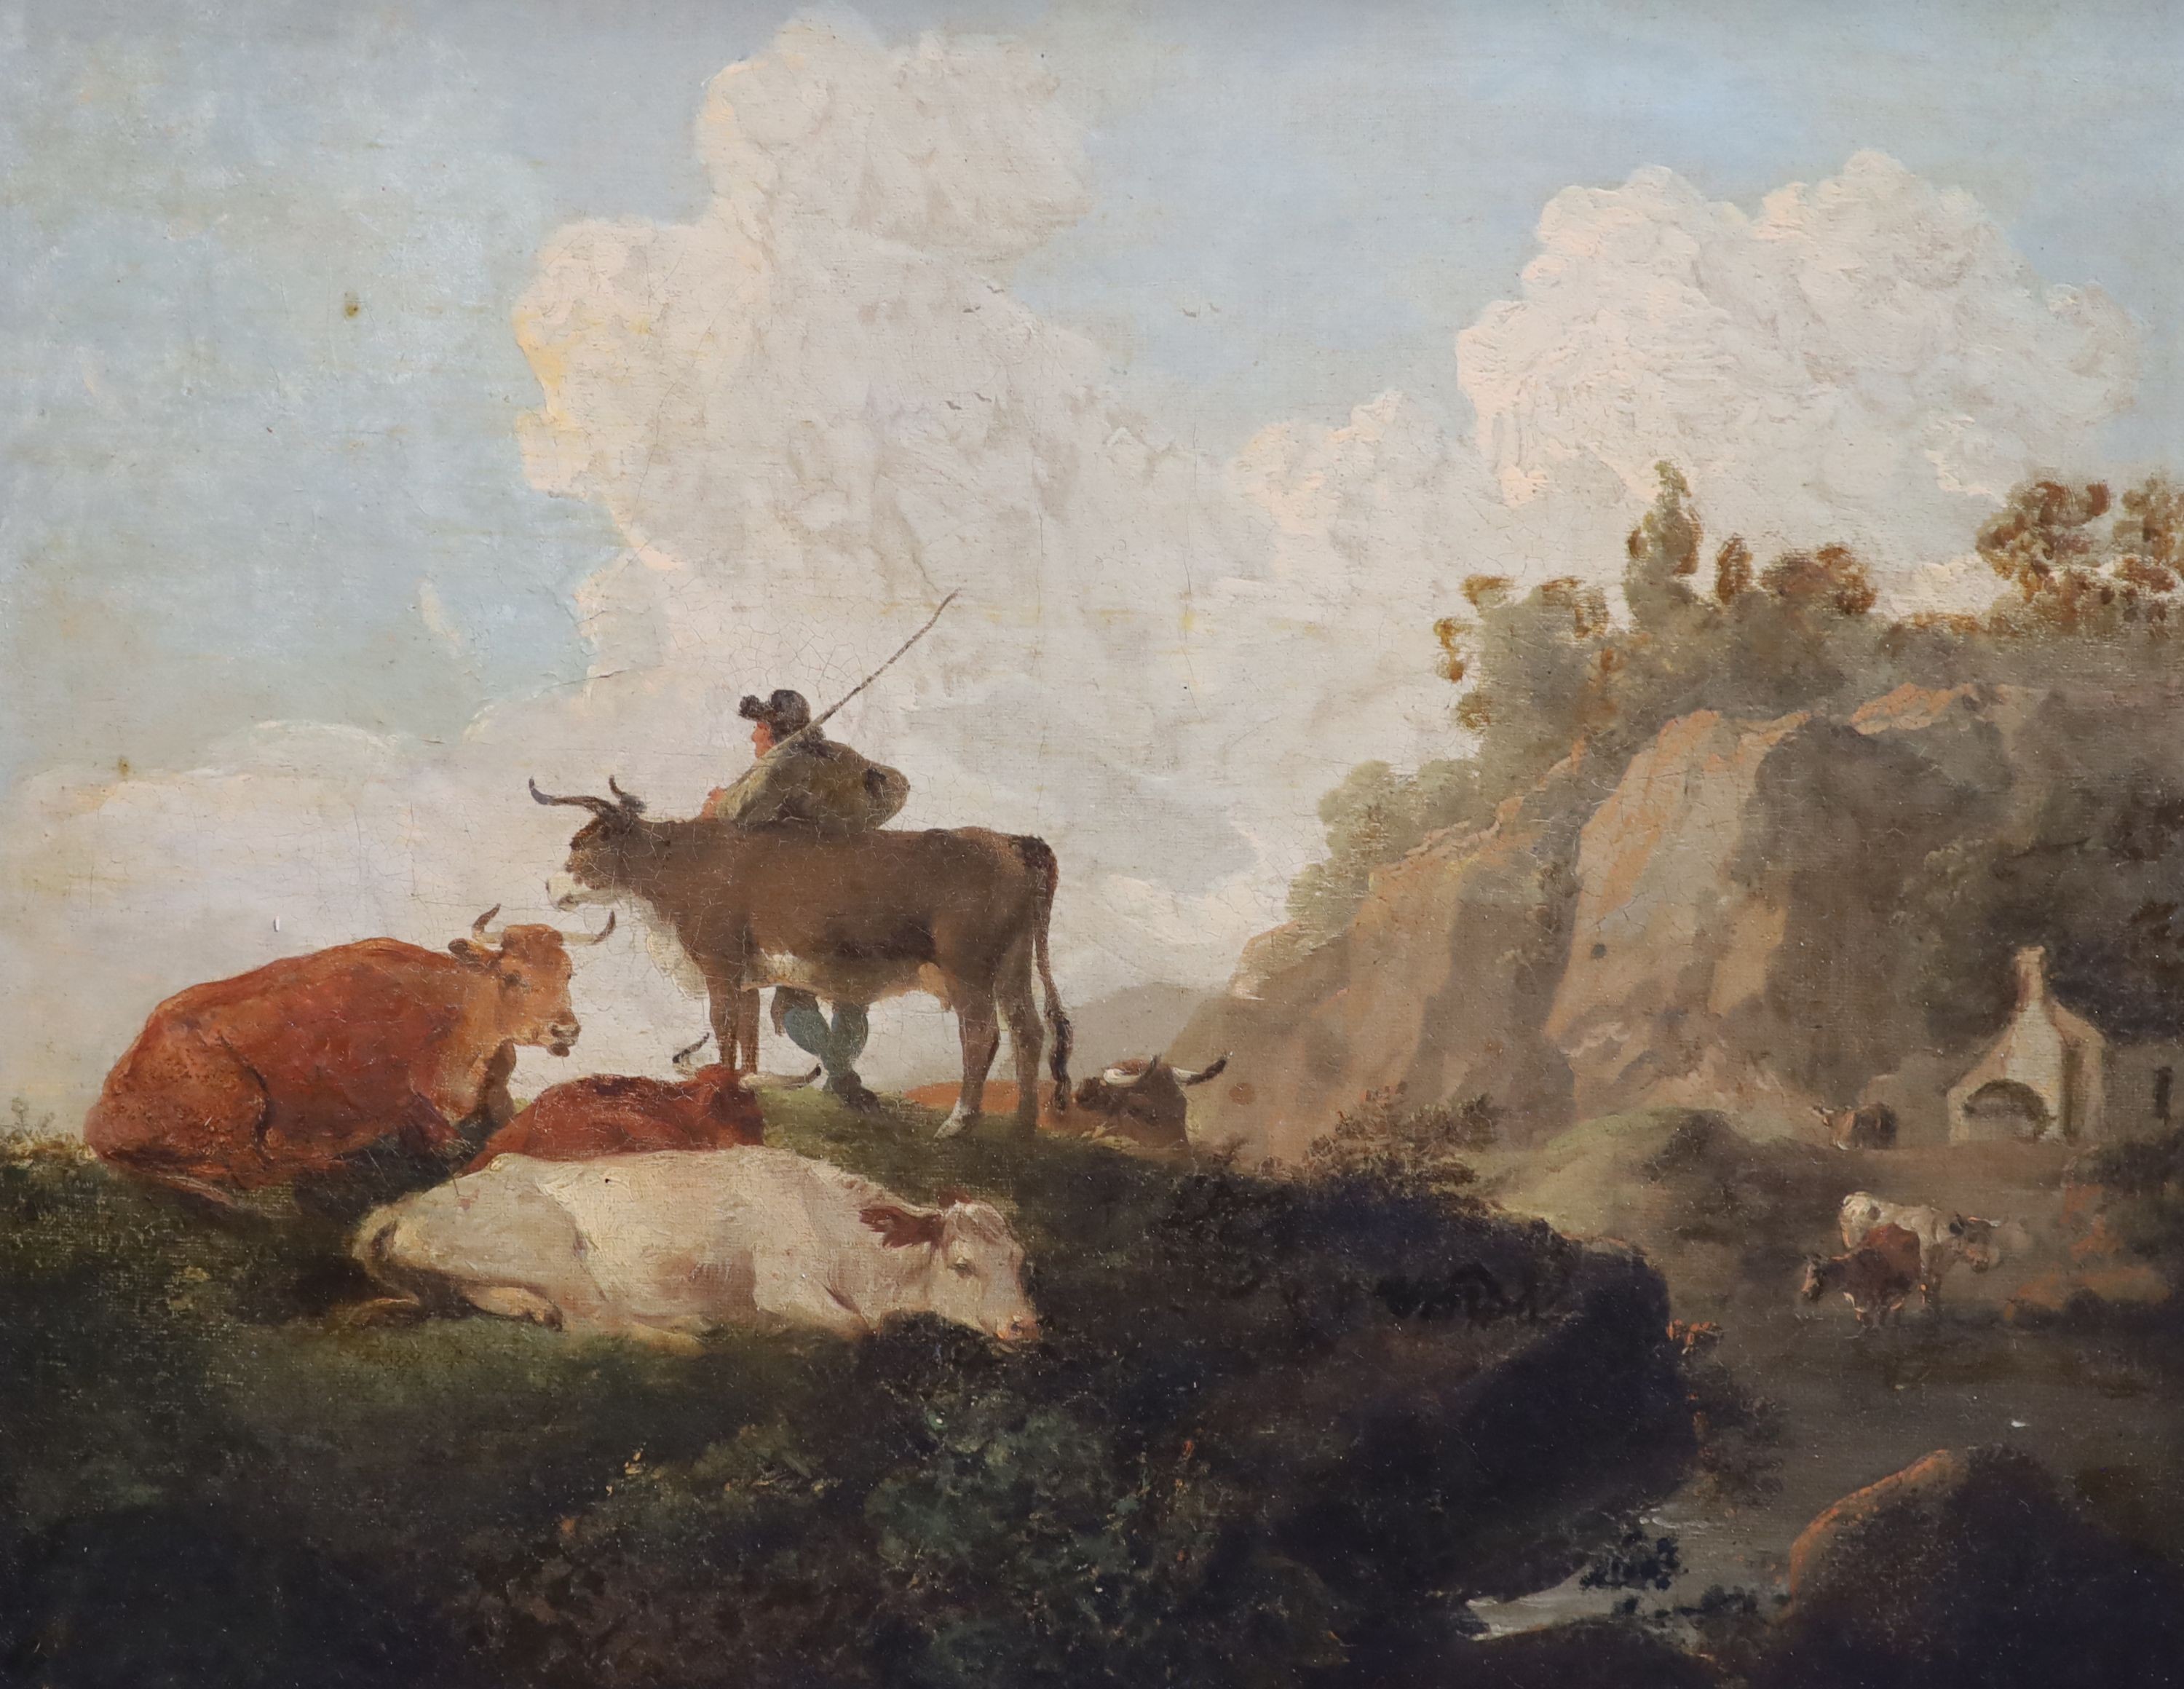 Julius Caesar Ibbetson (1759-1817), Cows resting in a landscape, Oil on canvas, 30 x 37cm.